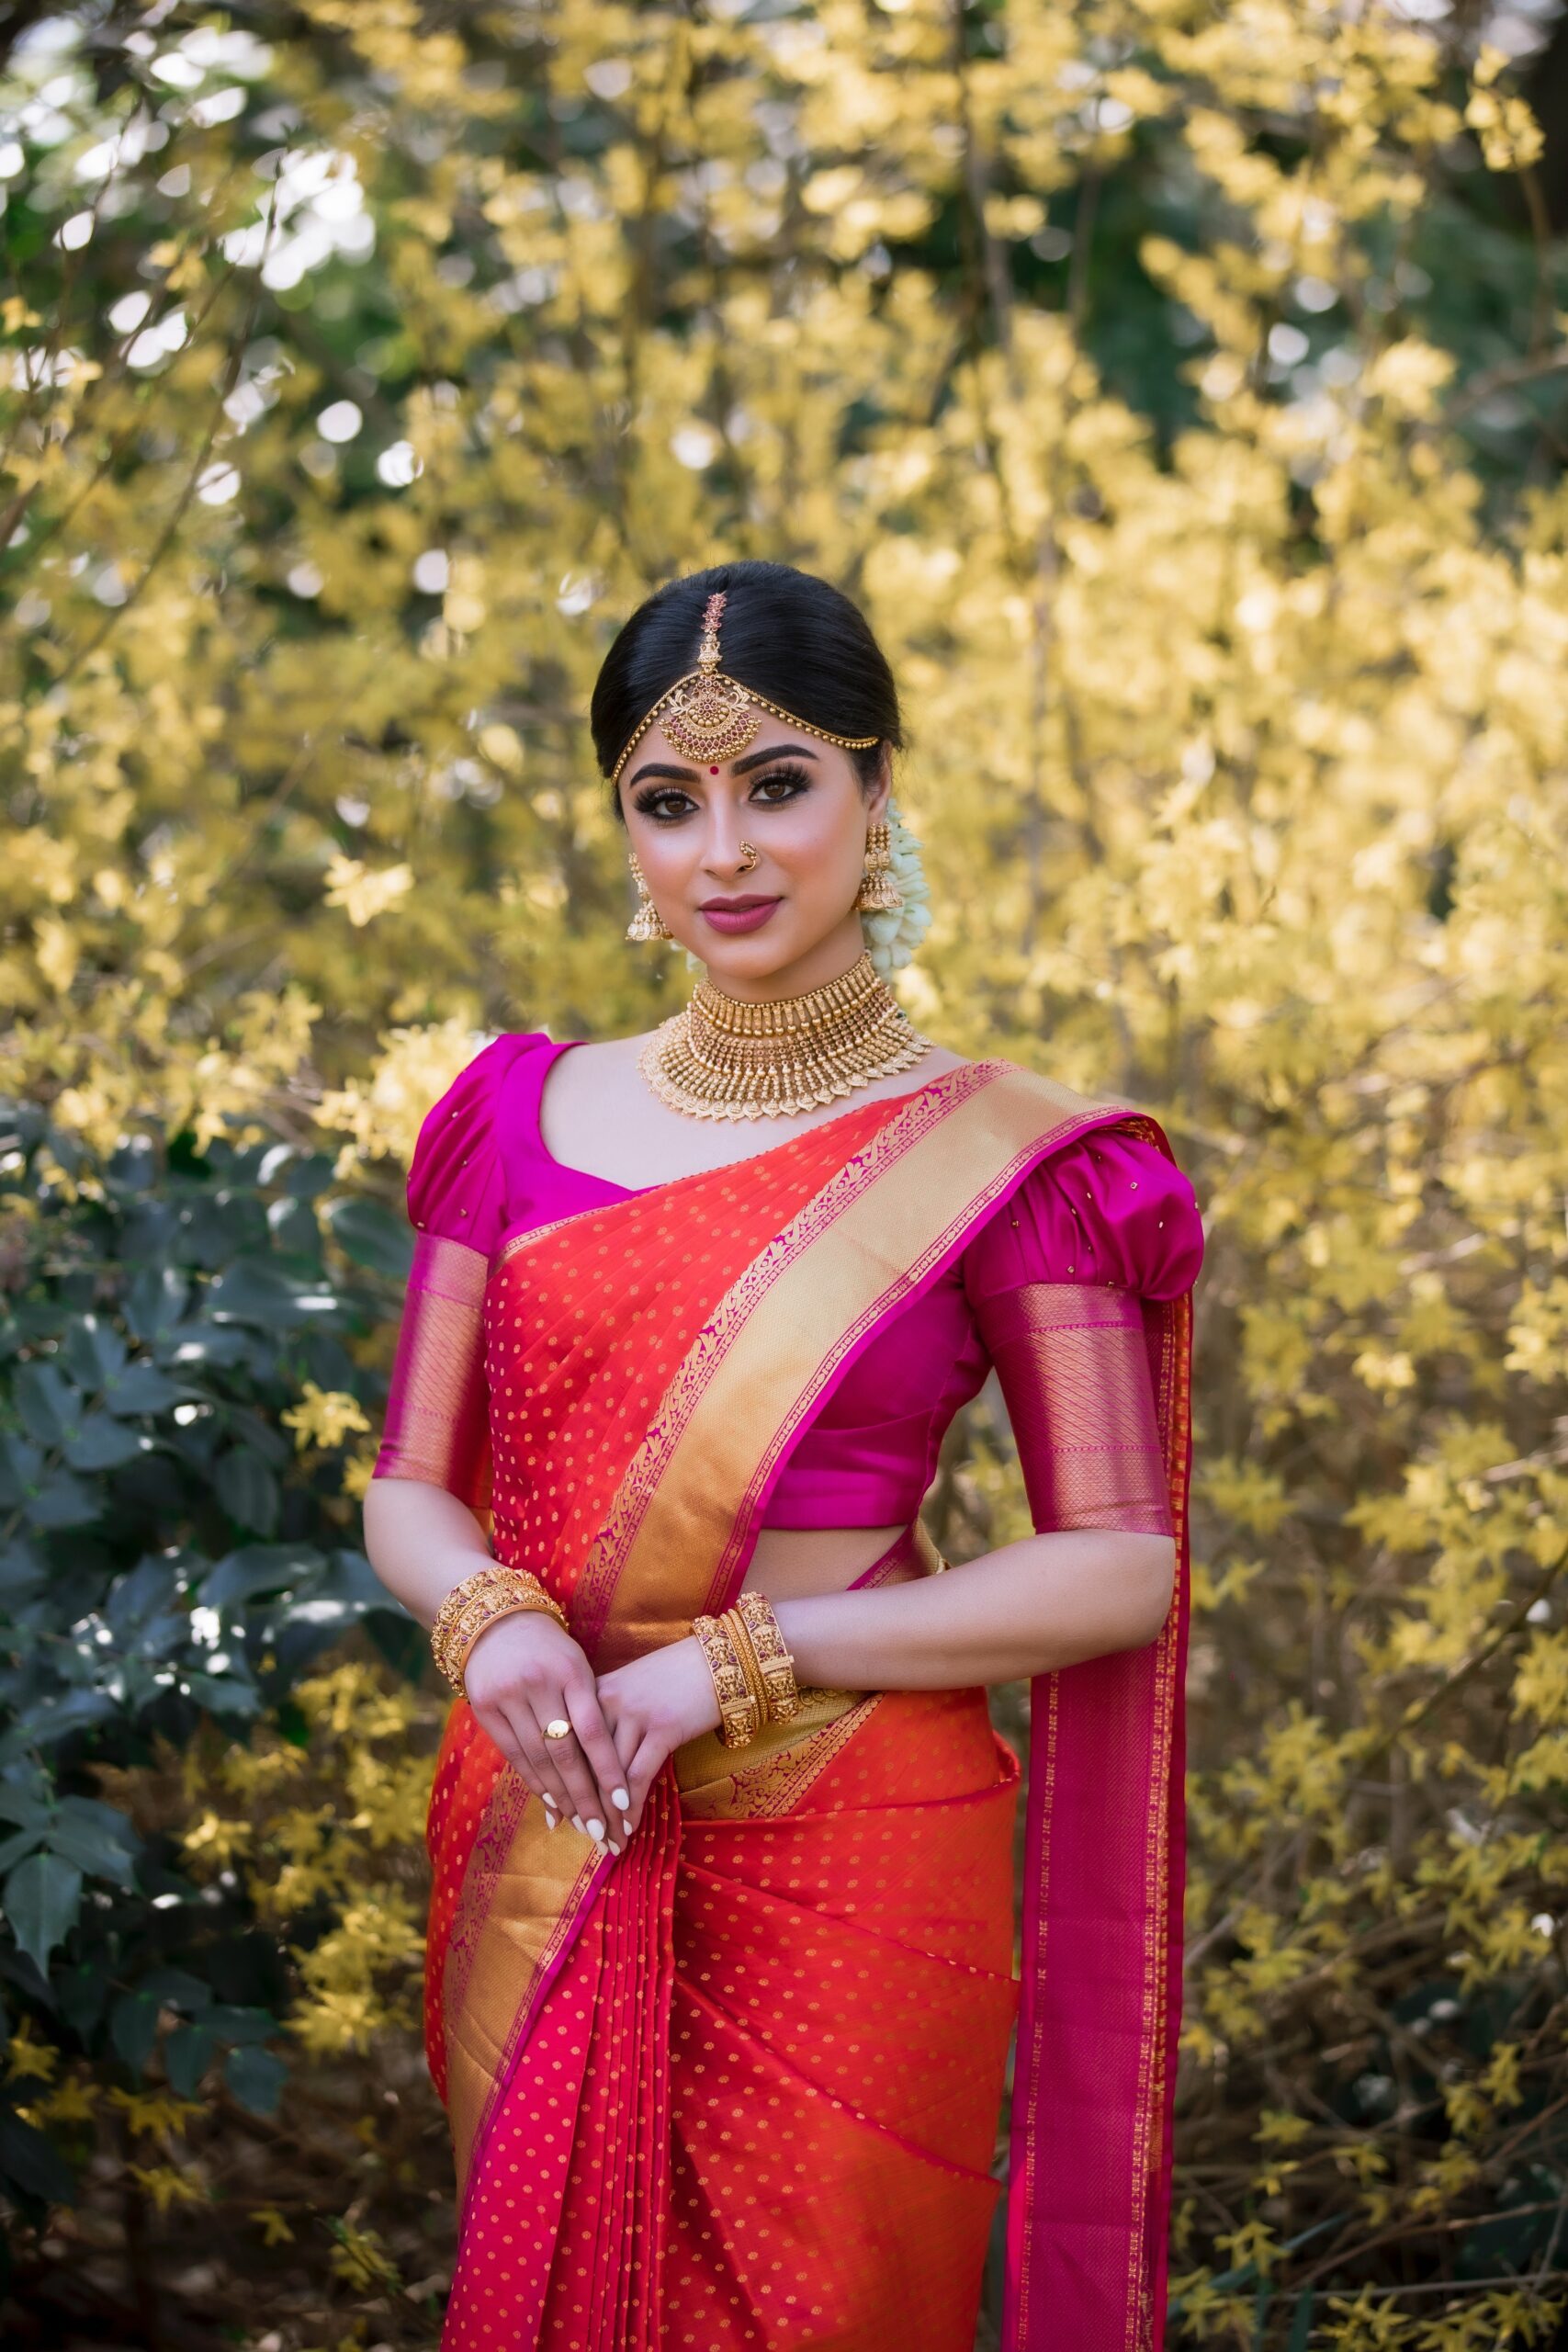 Indian Bride standing in garden wearing orange Saree